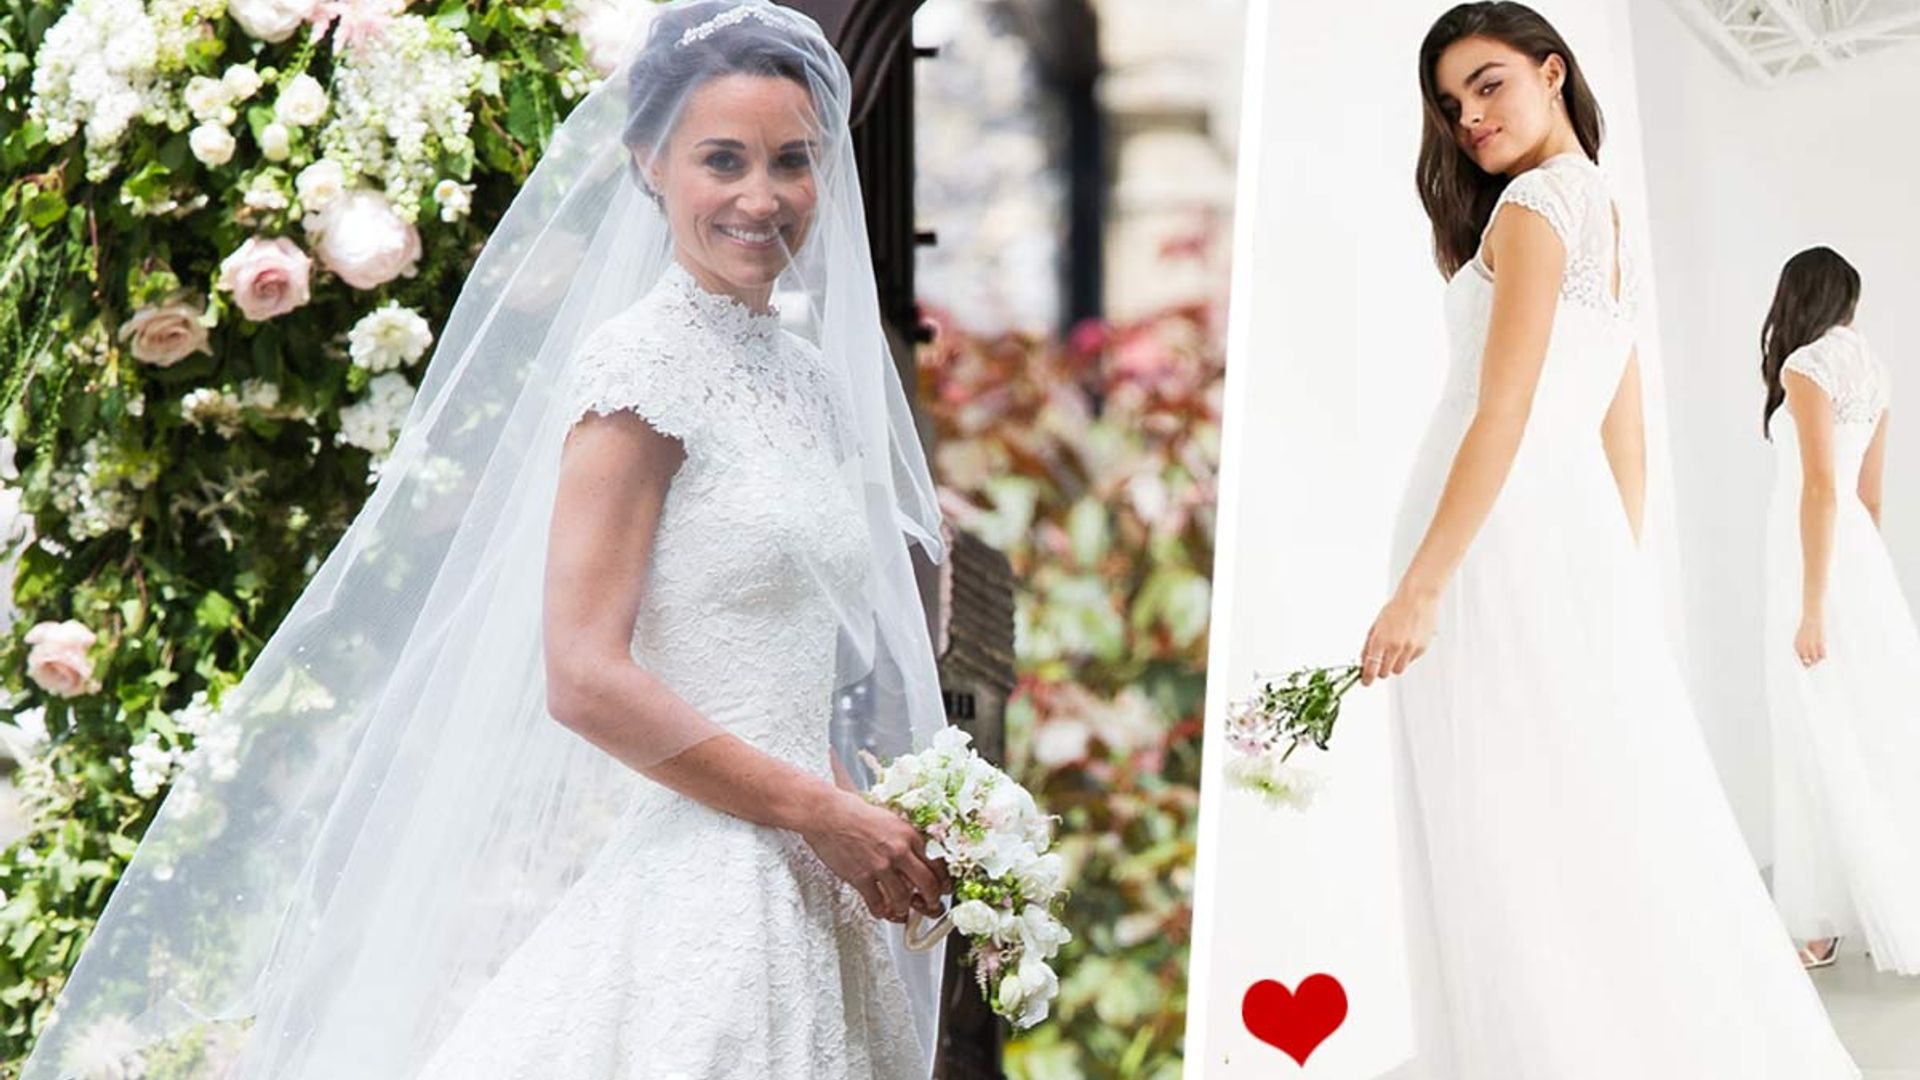 Loved Pippa Middleton’s wedding dress? ASOS is selling a similar design for £164